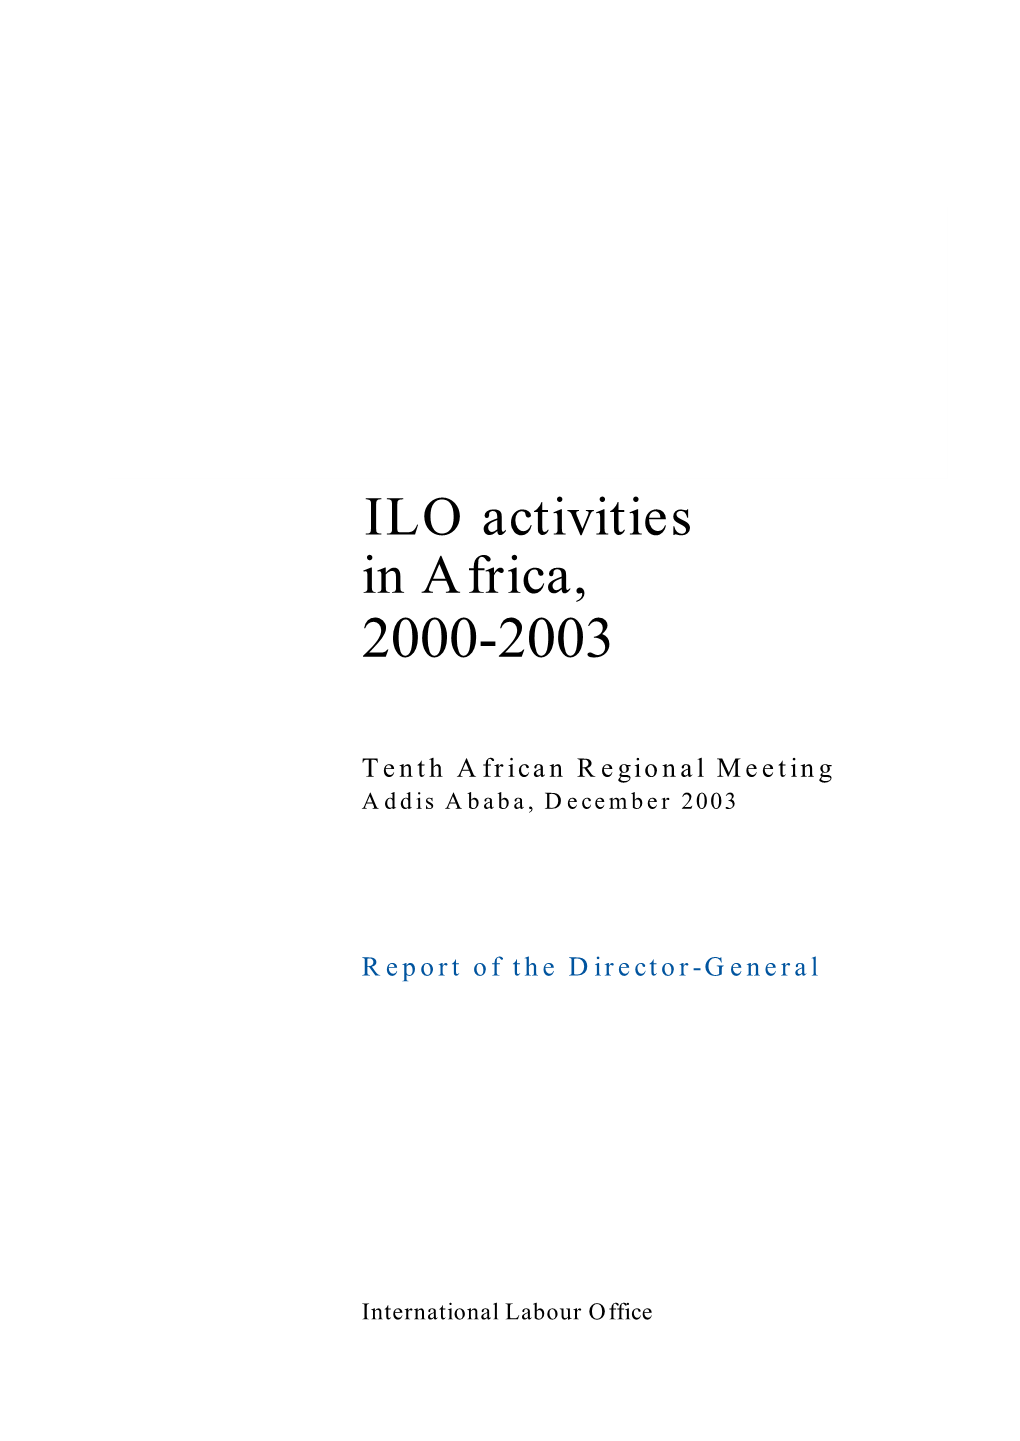 ILO Activities in Africa for 2000-2003